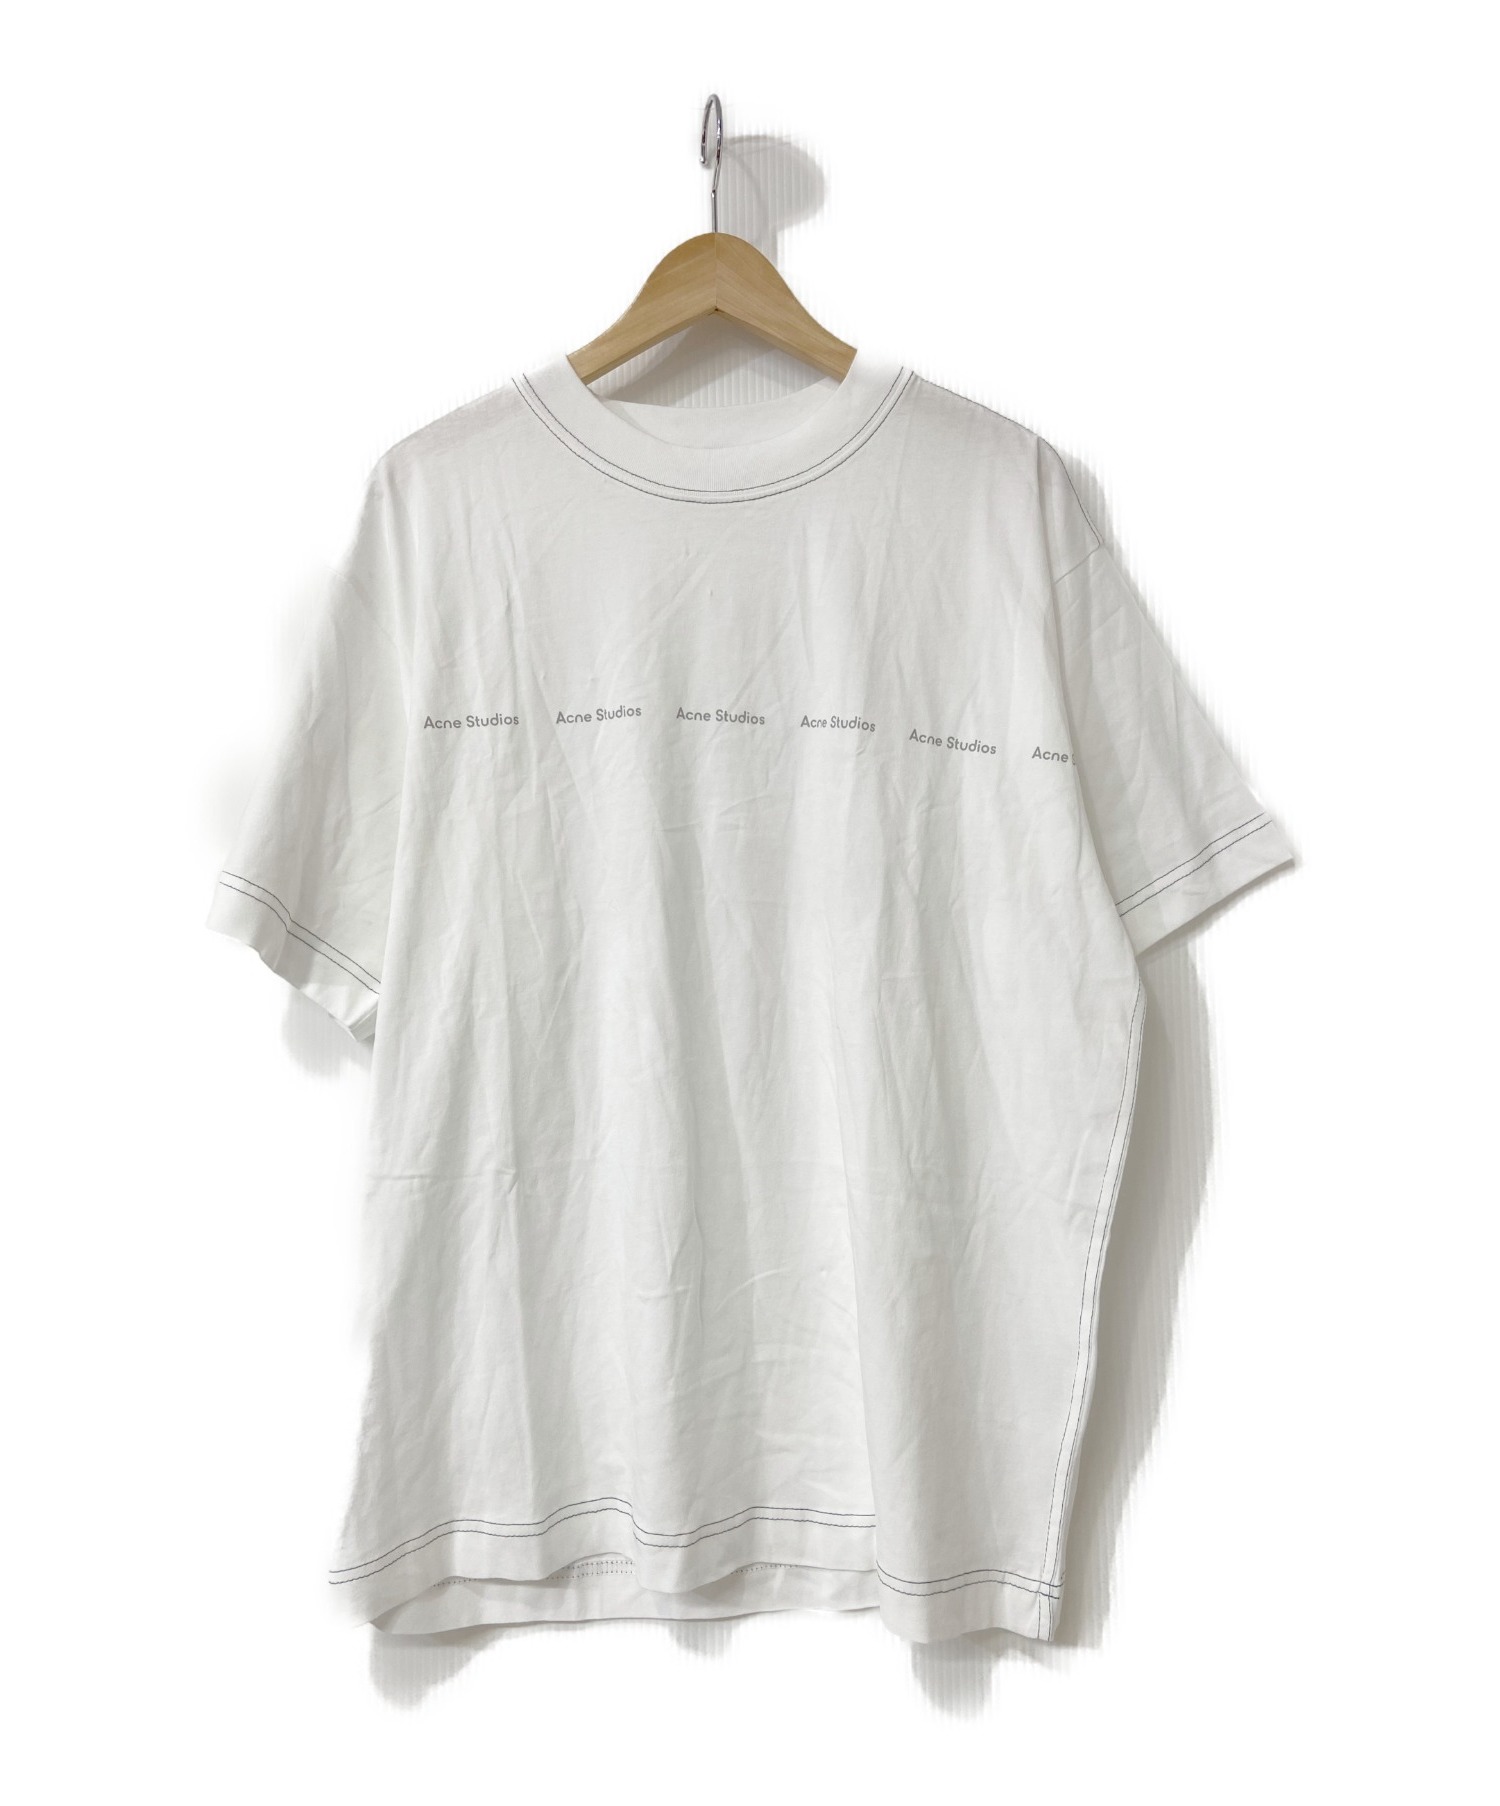 ACNE STUDIOS (アクネステュディオズ) ロゴプリントTシャツ ホワイト サイズ:L FN-MN-TSHI000196